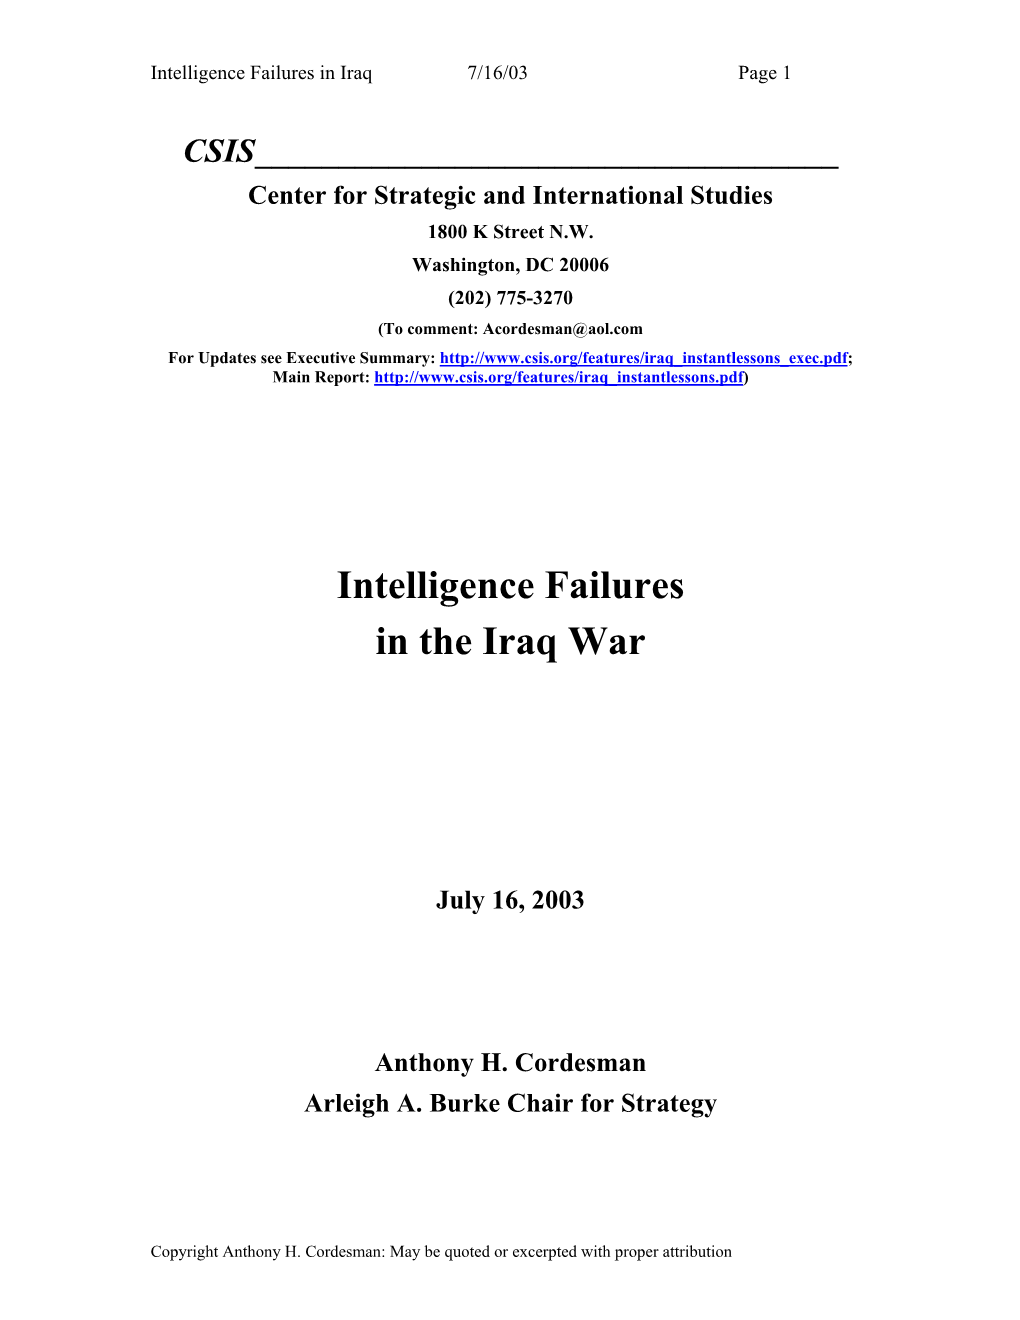 Intelligence Failures in the Iraq War